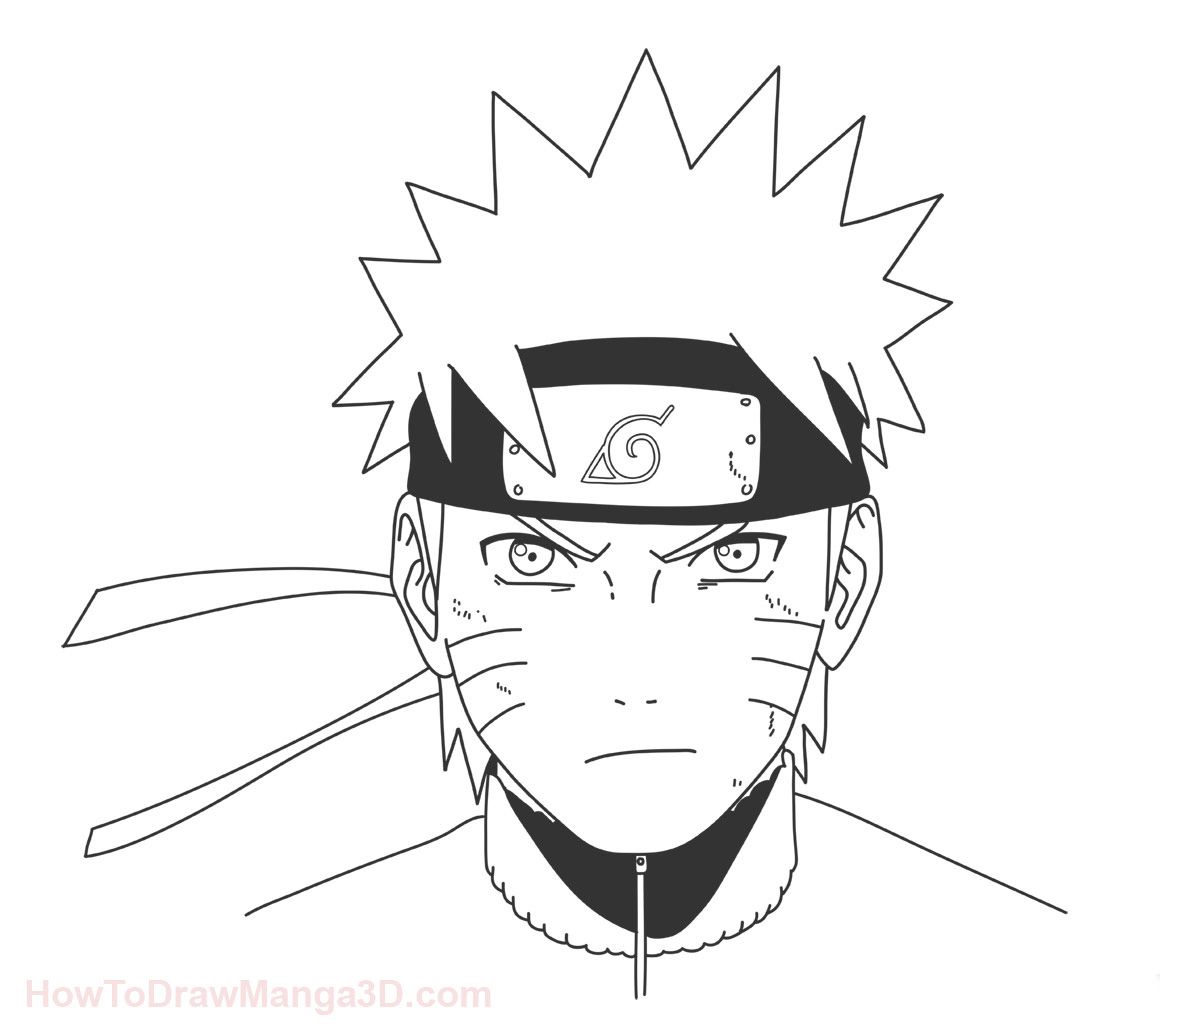 How to Draw Naruto from Naruto Shippuden